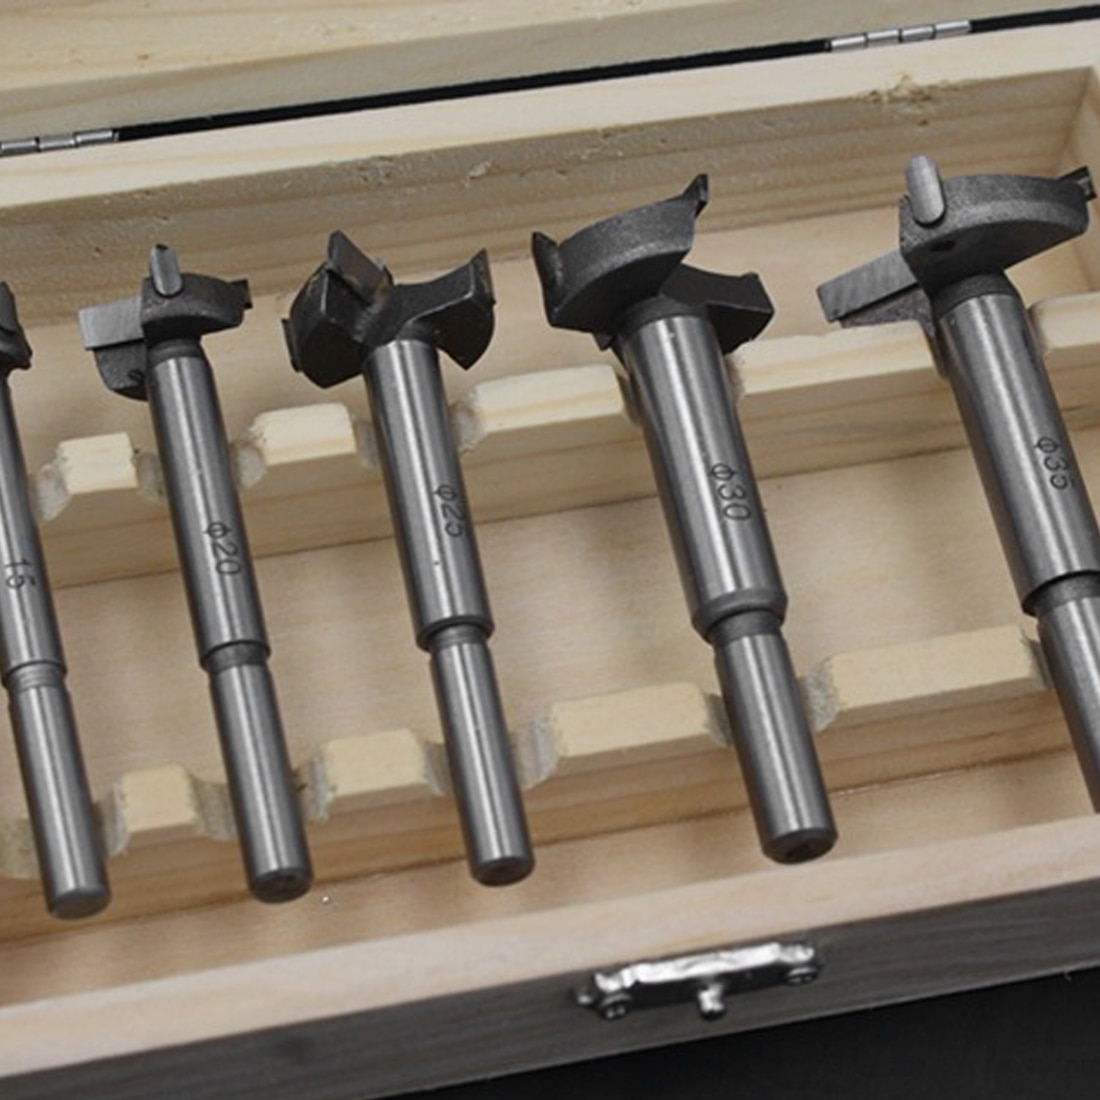 Forstner Wood Drill Bit Self Centering Hole Saw Cutter Woodworking Tools Set 15mm,20mm,25mm,30mm,35mm Forstner Drill Bits